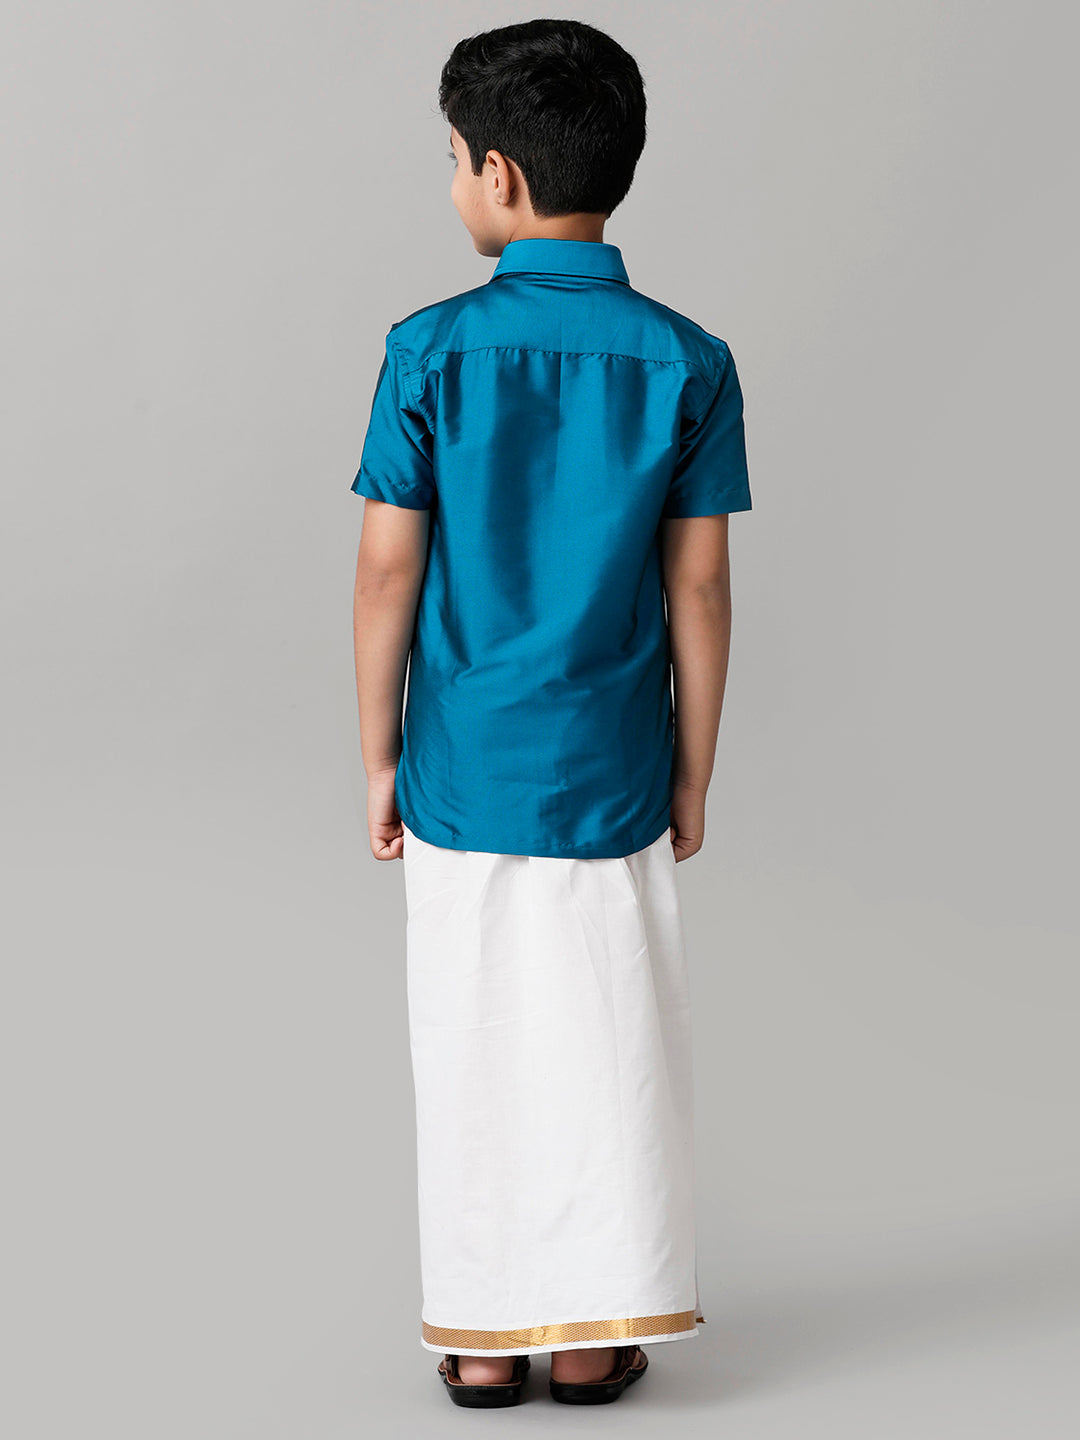 Boys Silk Cotton Light Blue Half Sleeves Shirt with Adjustable White Dhoti Combo K1-Back view